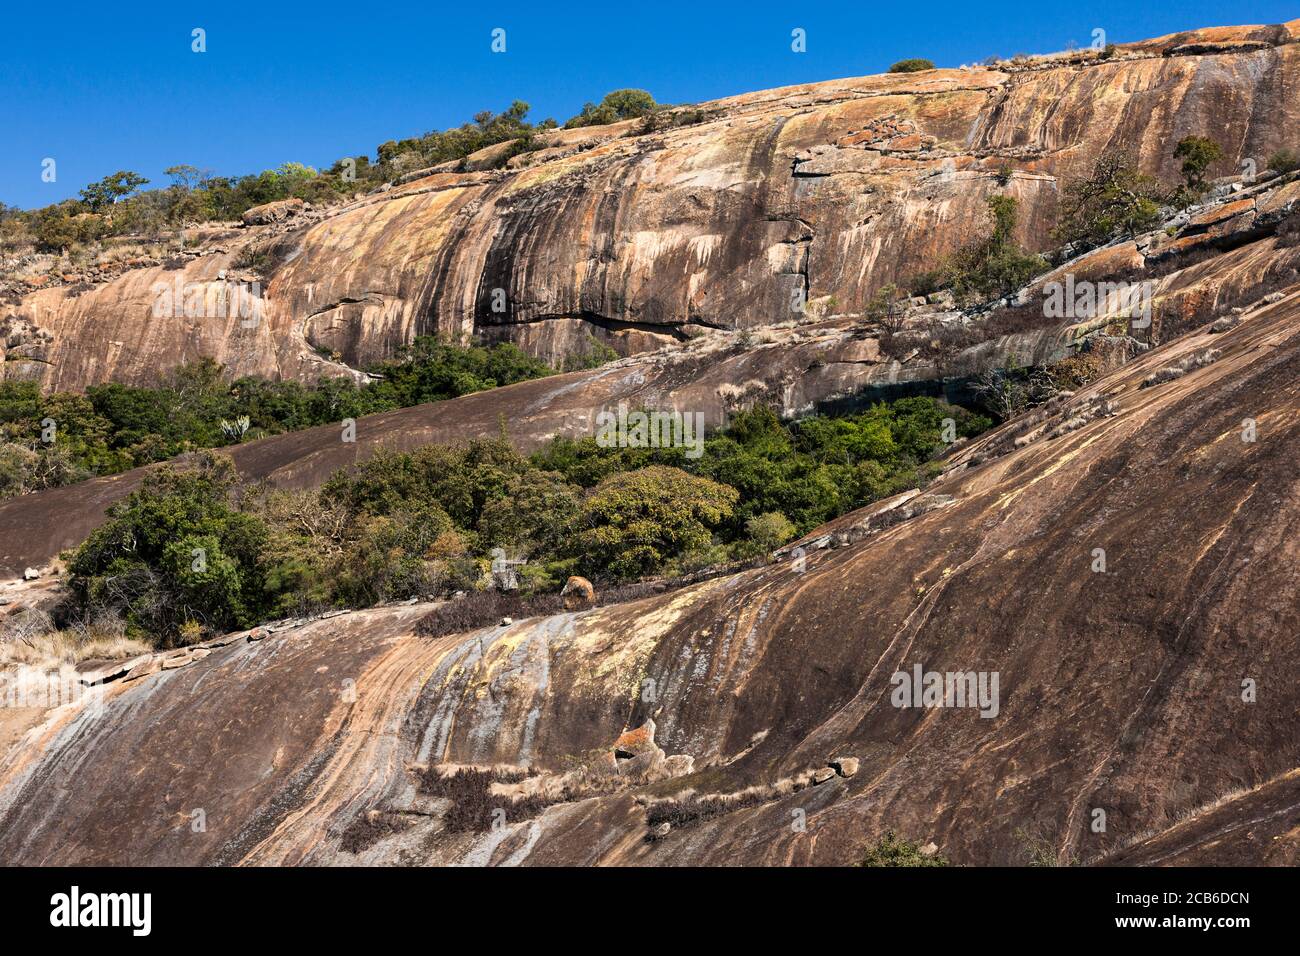 Matobo hills, granite bedrock hill at Inanke cave, rock painting site, Matobo National Park, suburbs of Bulawayo, Matabeleland South, Zimbabwe, Africa Stock Photo